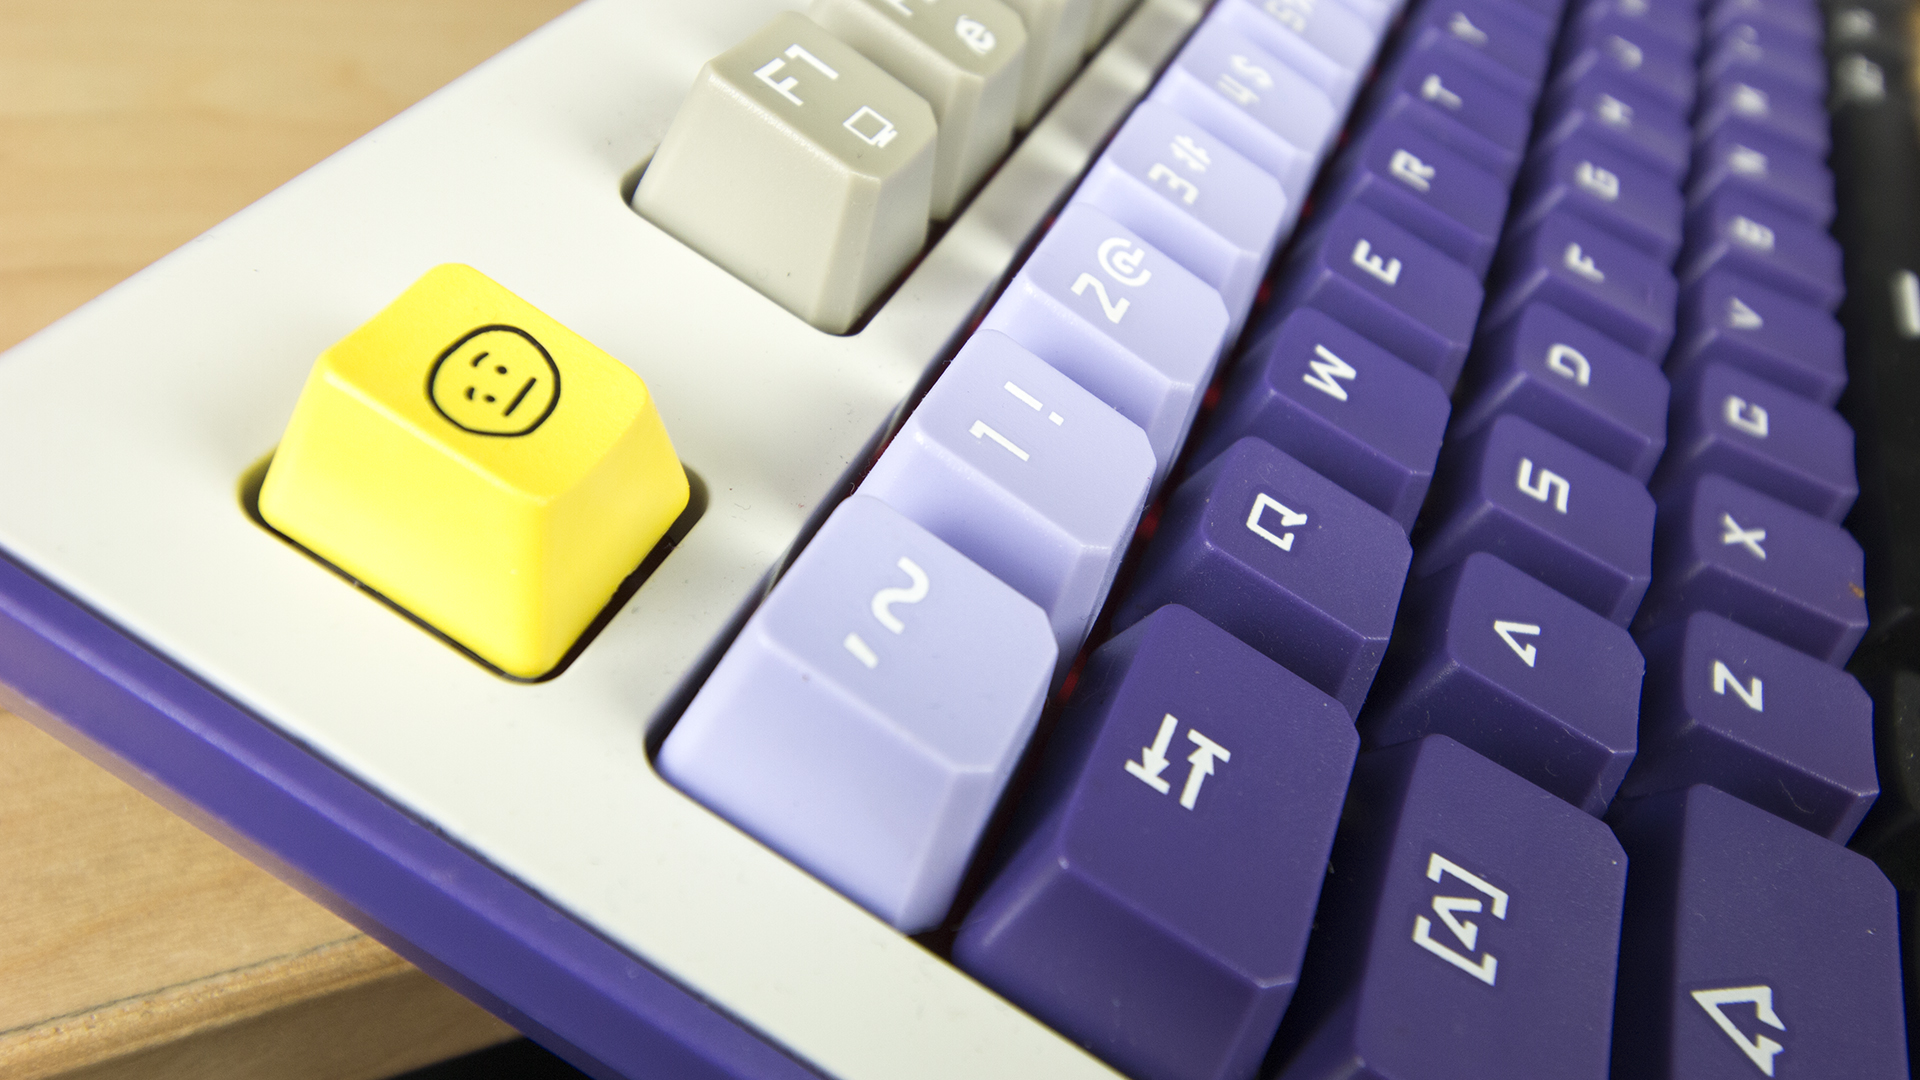 Hyper Clack Retro-Style Mechanical Keyboard: The Kotaku Review